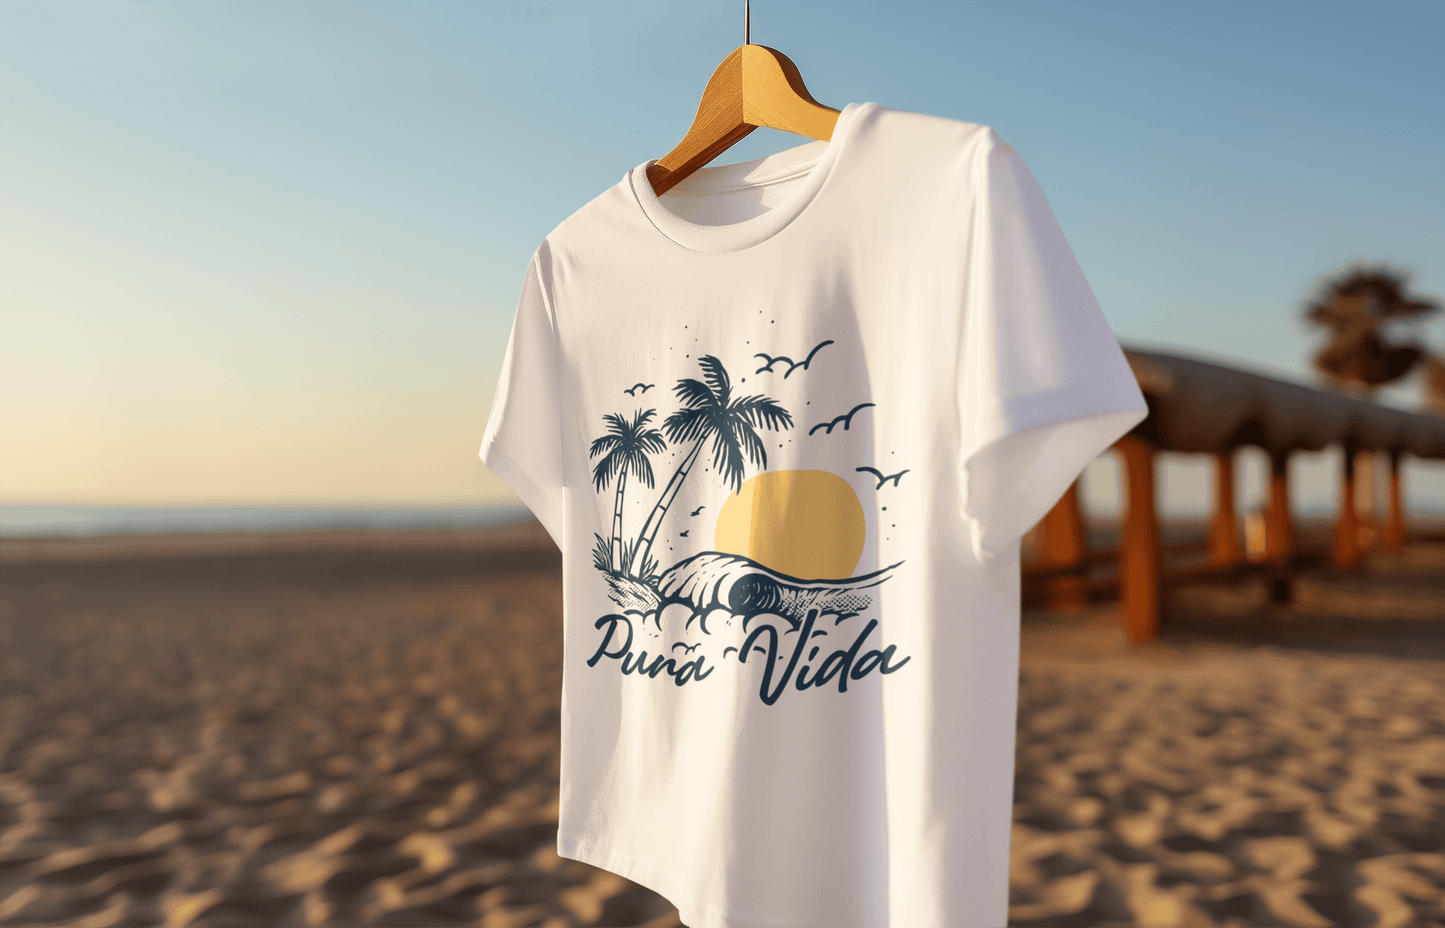 Beach, Sun and Pura Vida - The Pura Vida Co.